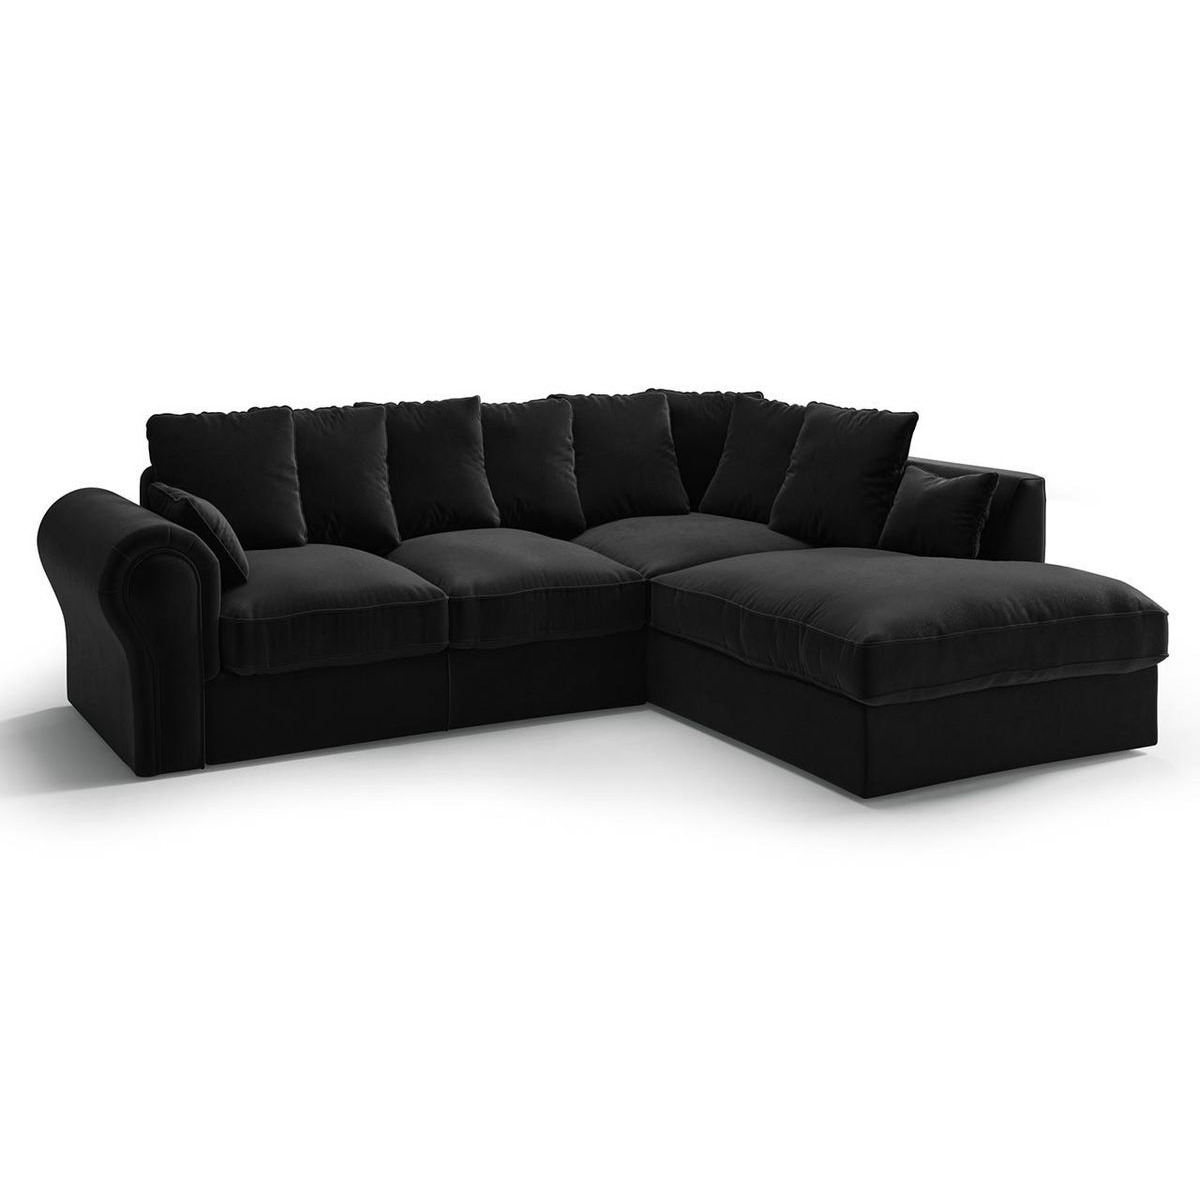 Baron Right Hand Corner Sofa, black - image 1